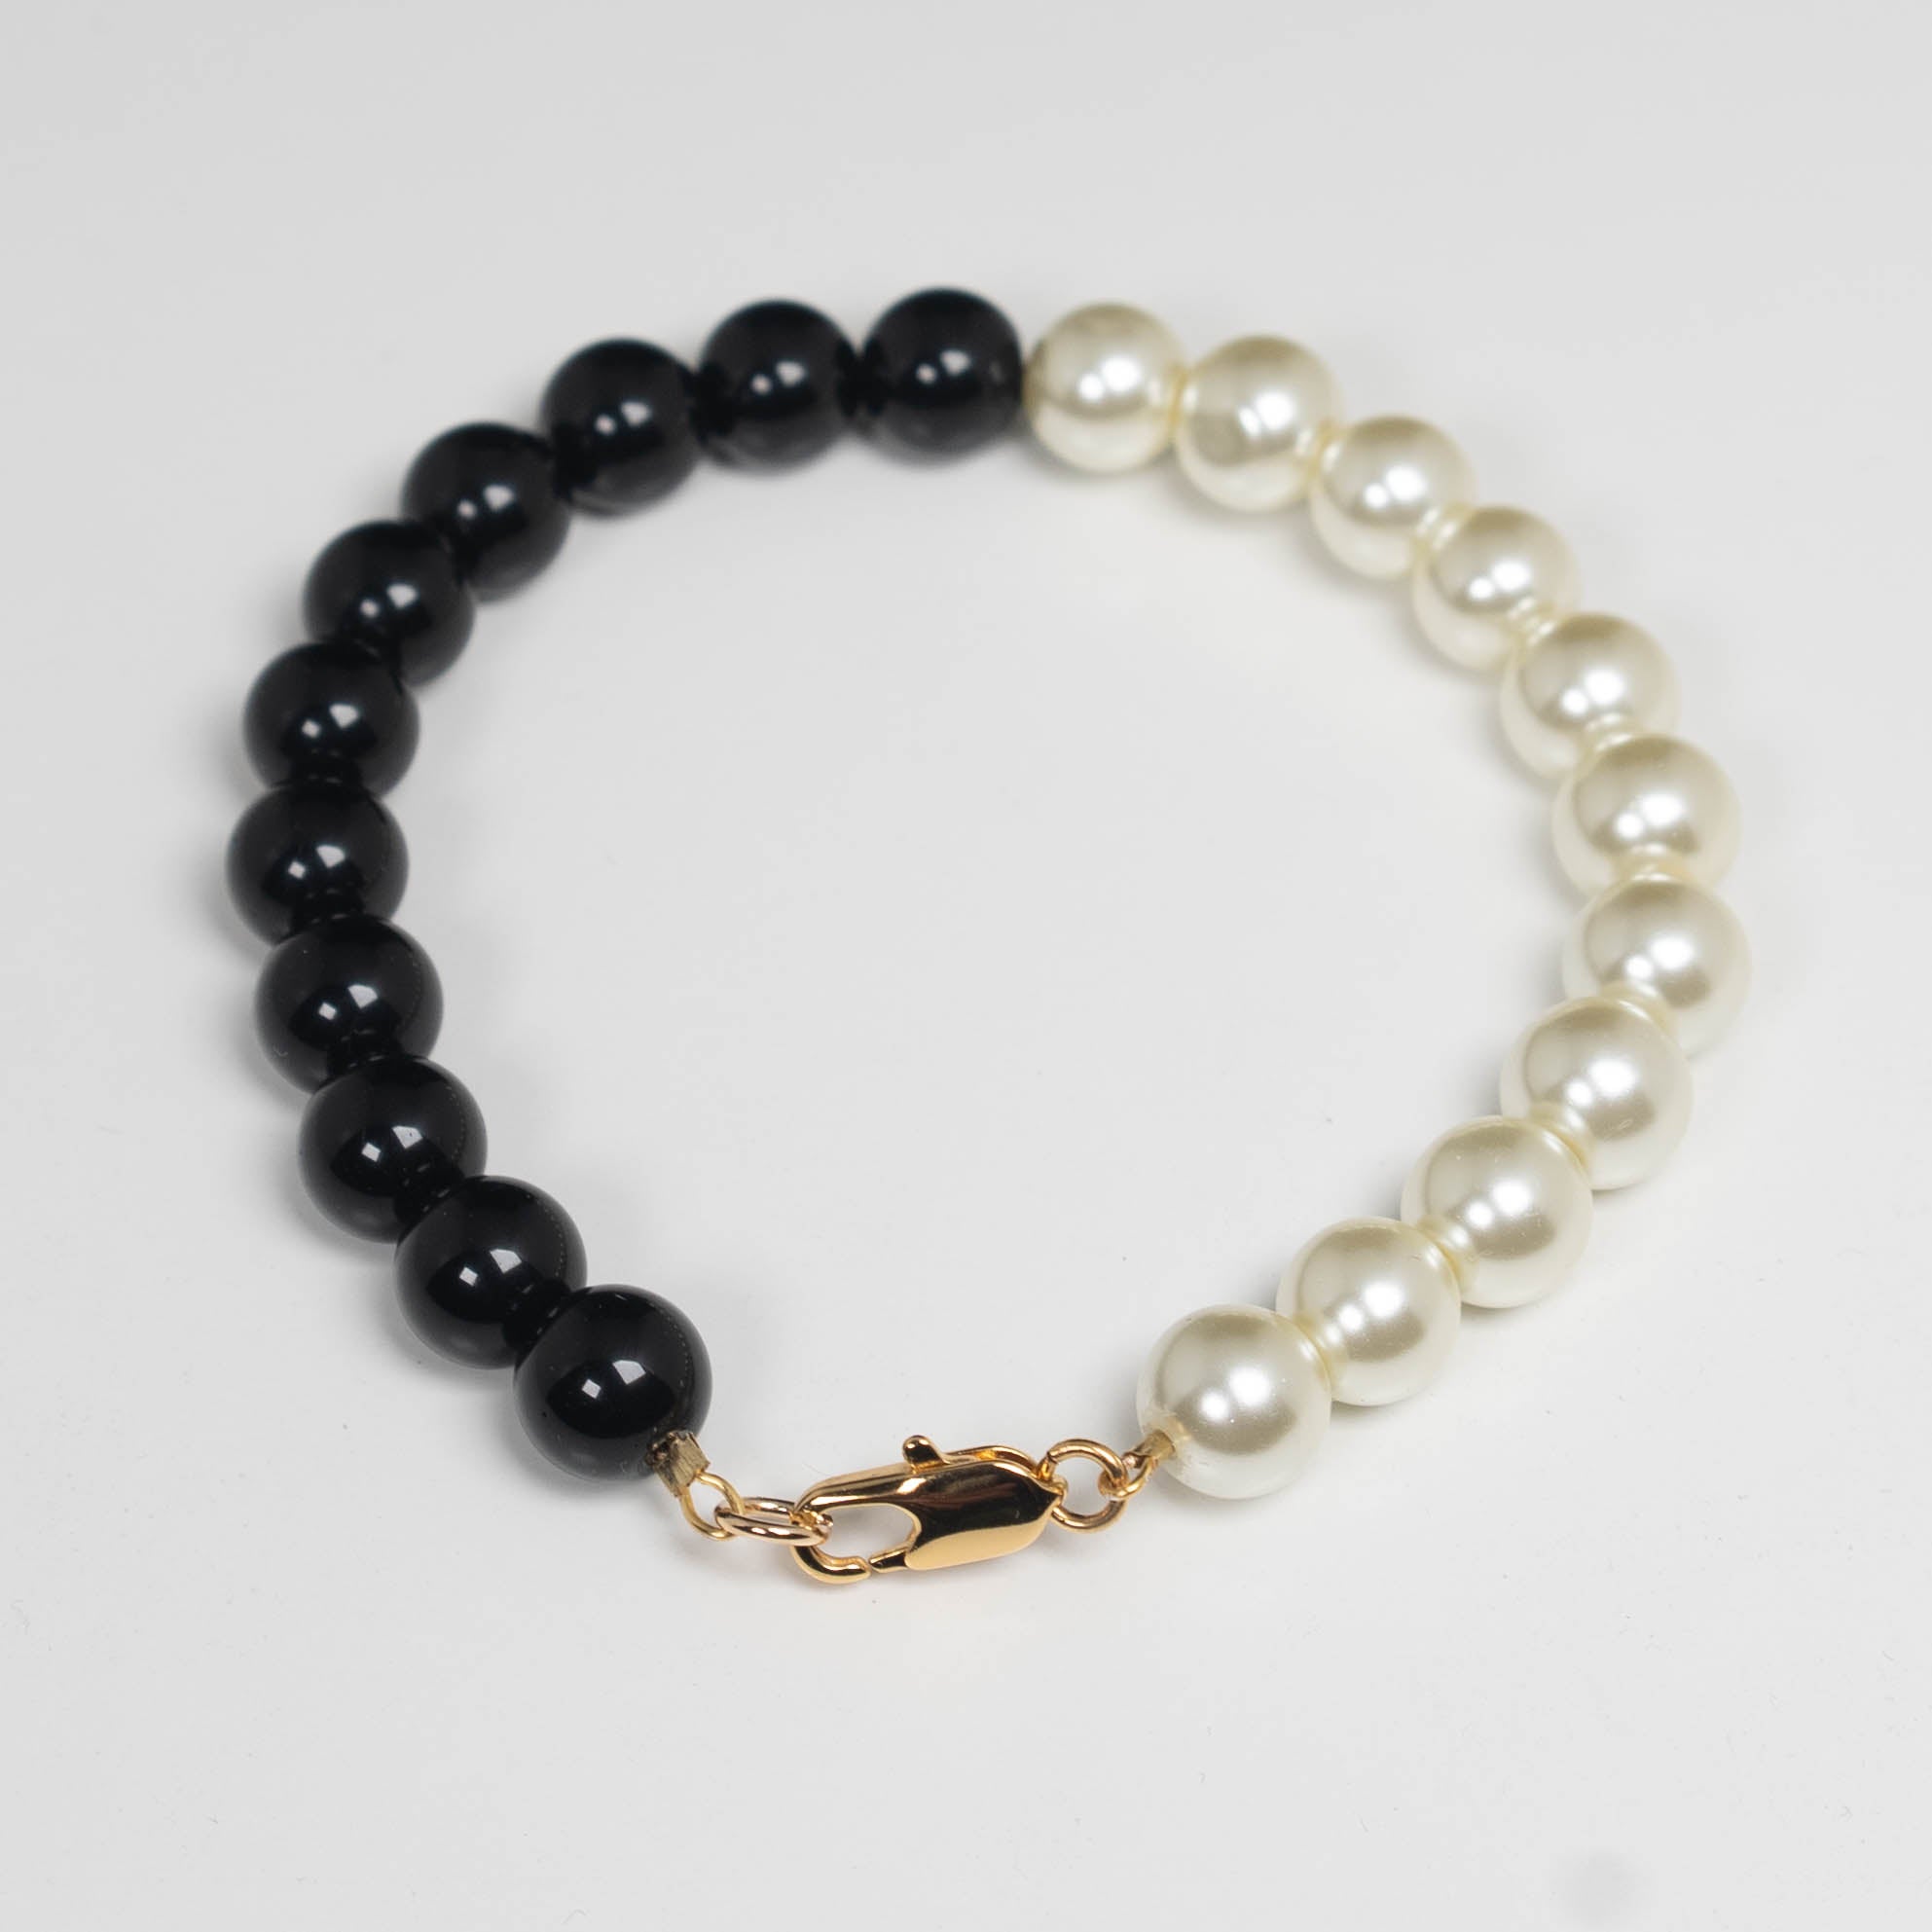 Yin Yang bracelet